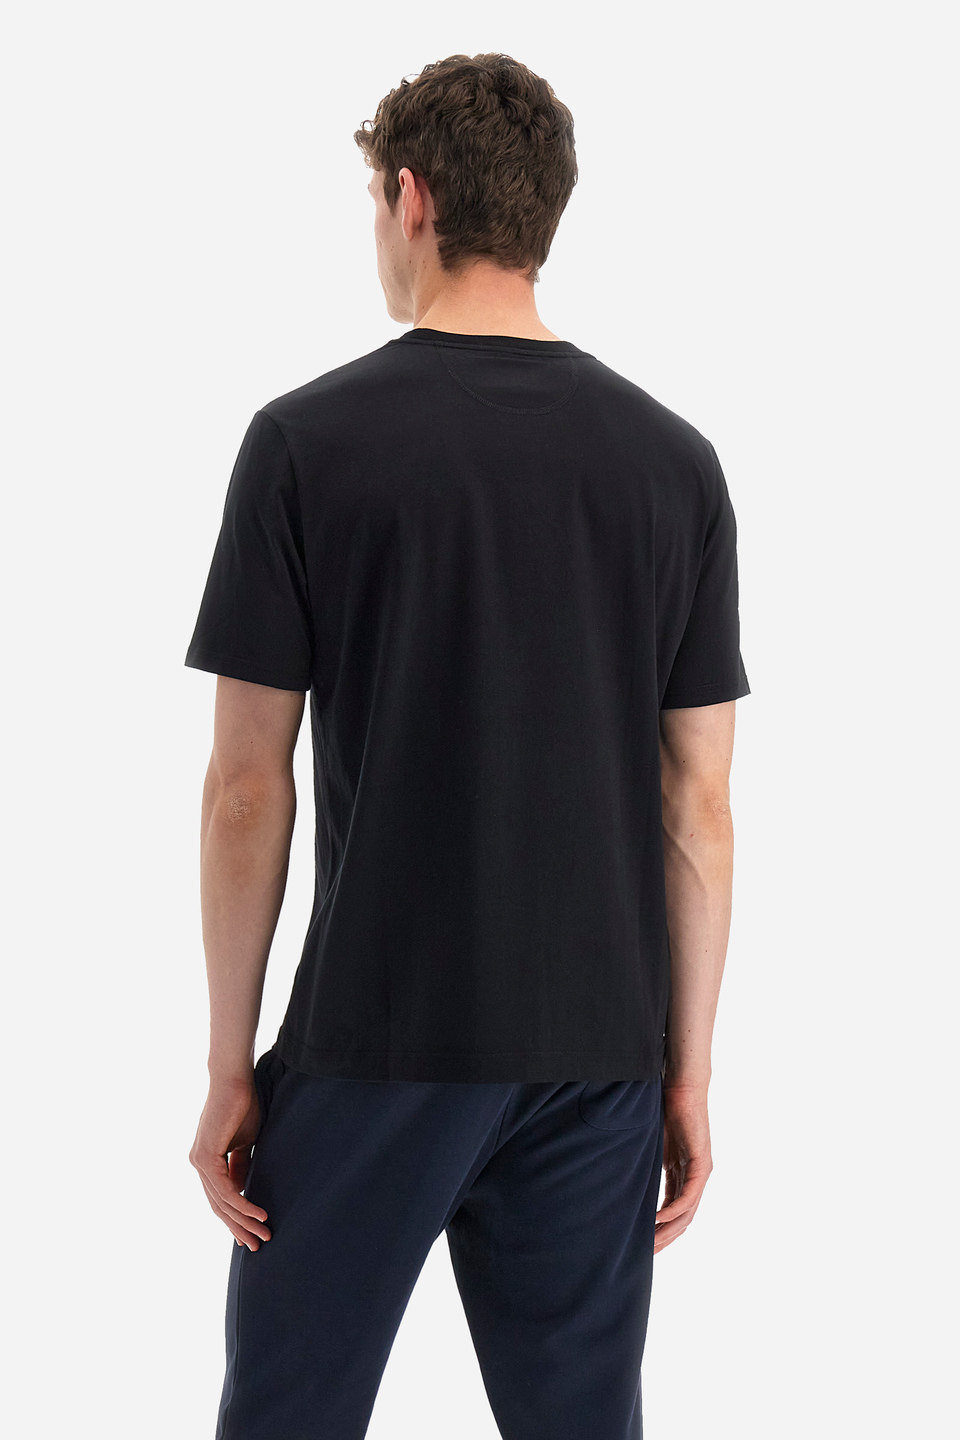 Herren -T -Shirt regular fit - Wakely | La Martina - Official Online Shop